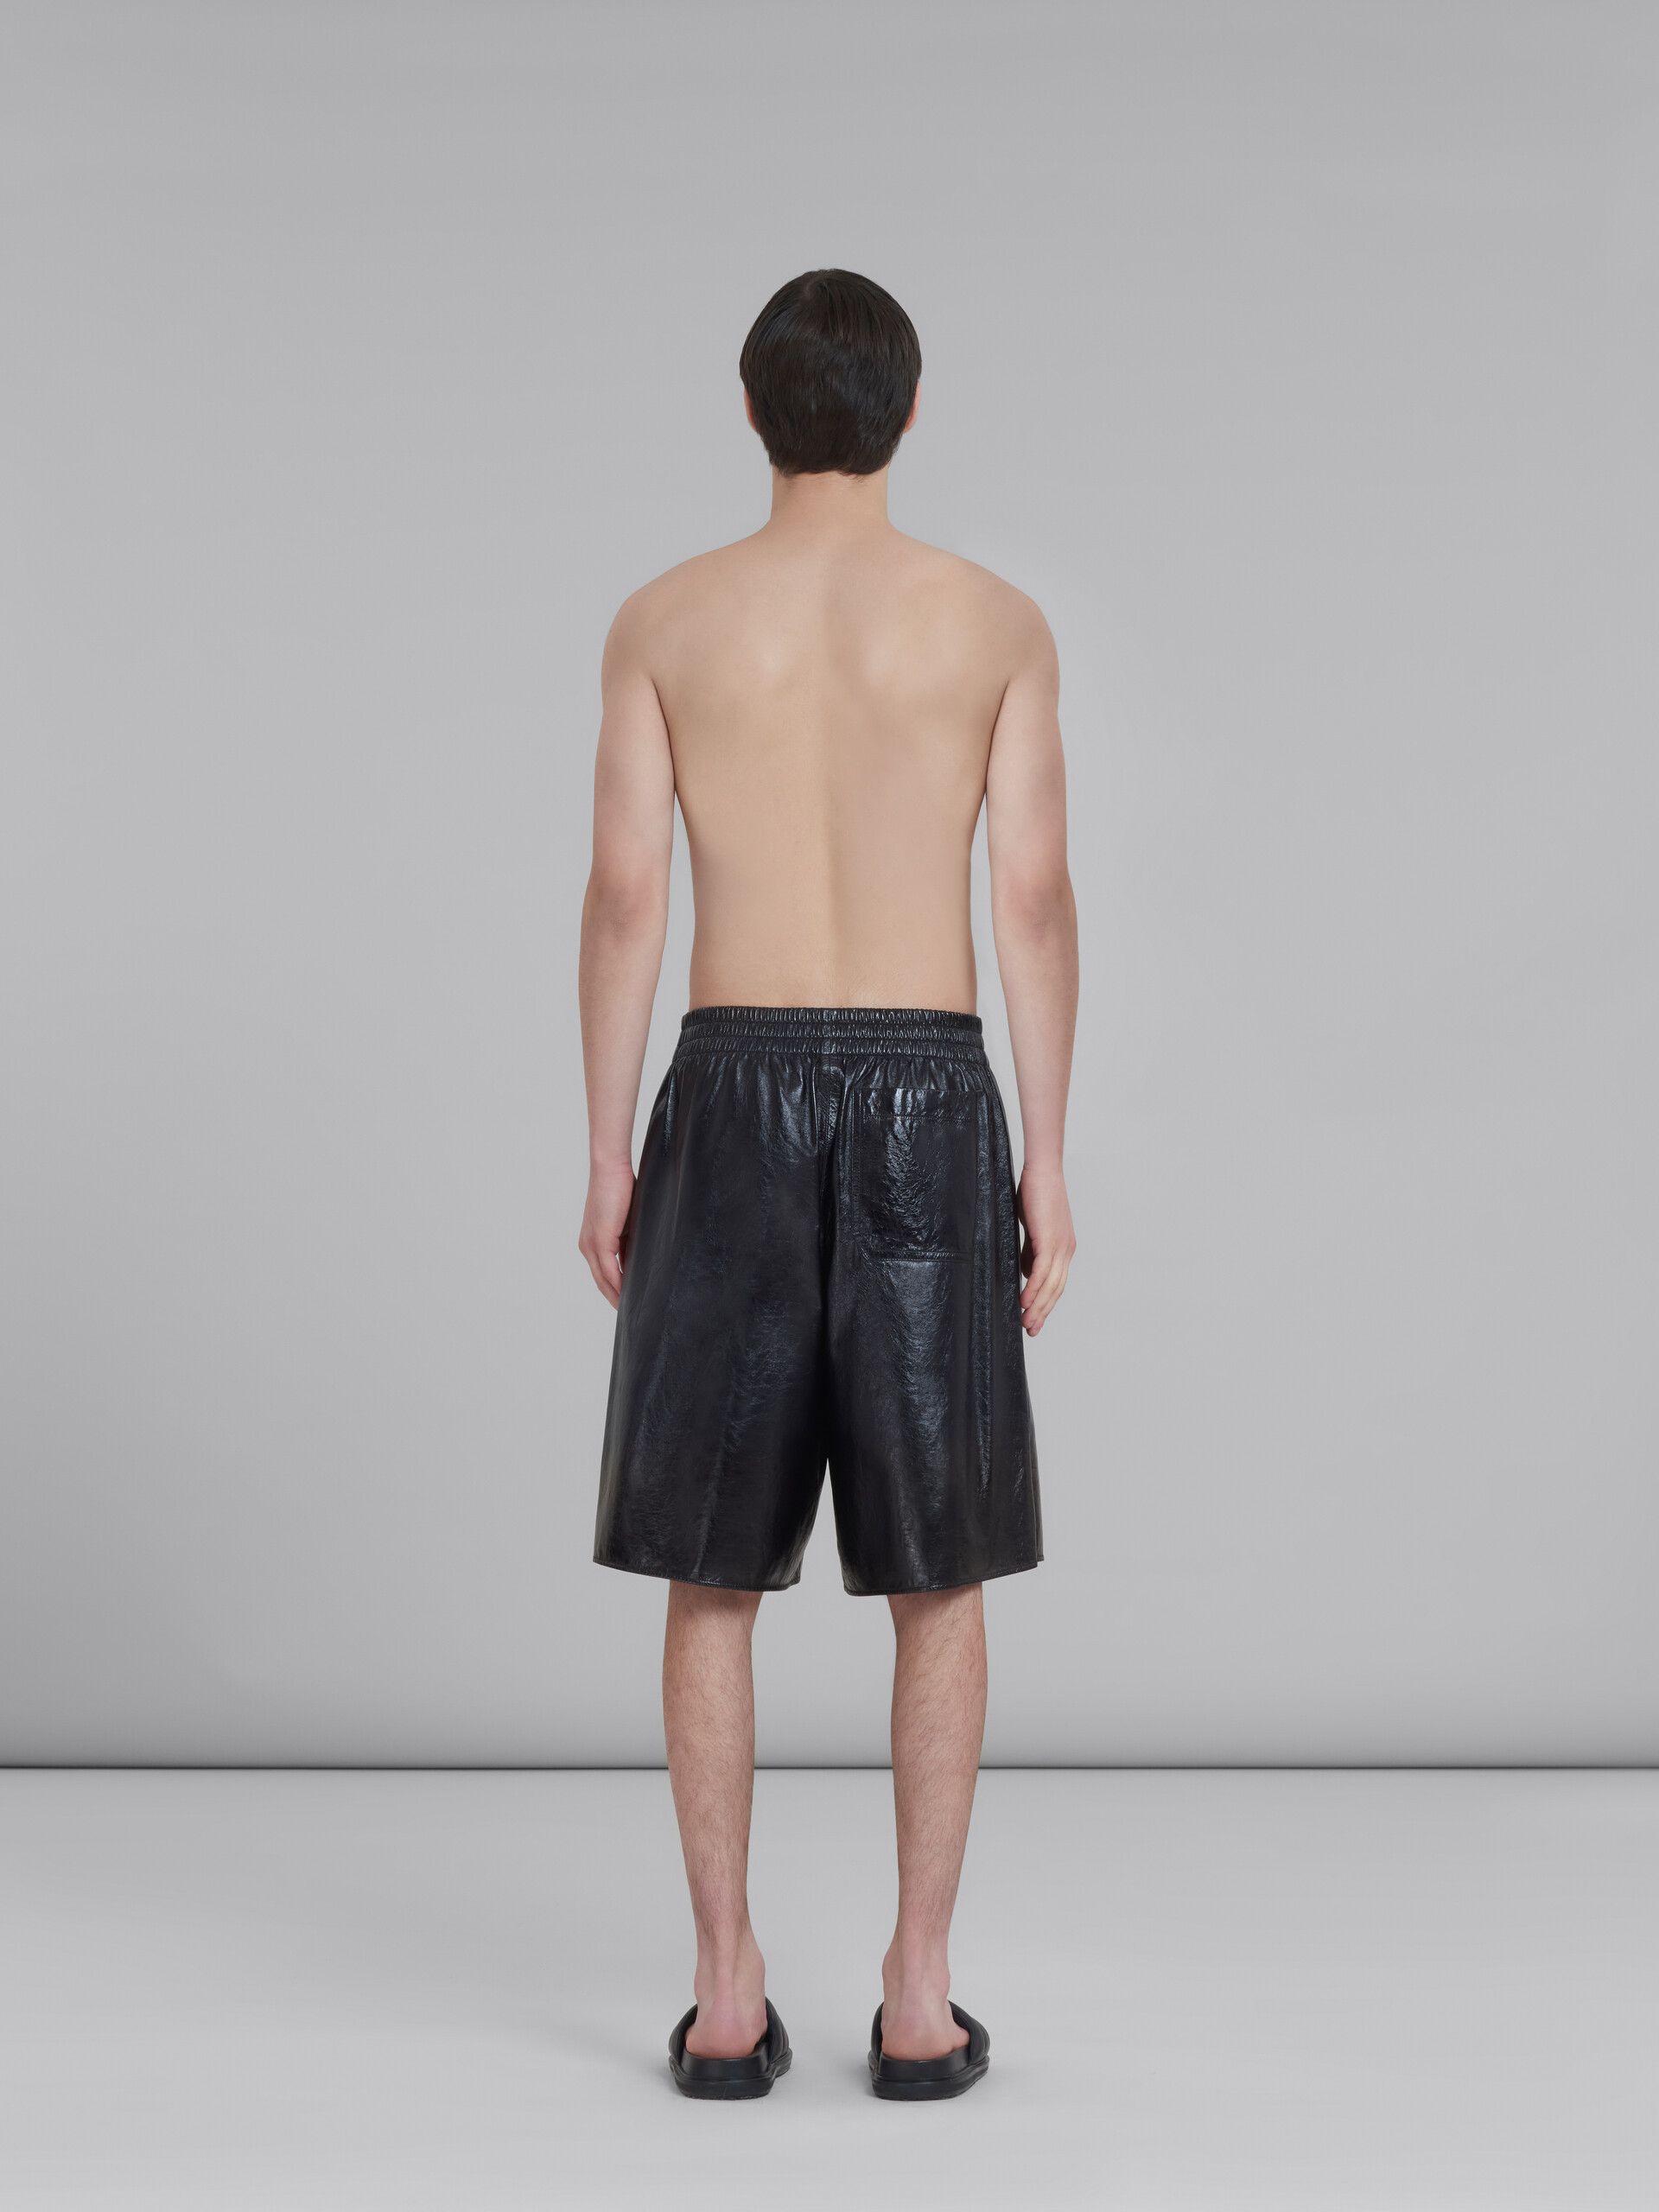 Black bermuda shorts in ultralight naplak leather - Pants - Image 3